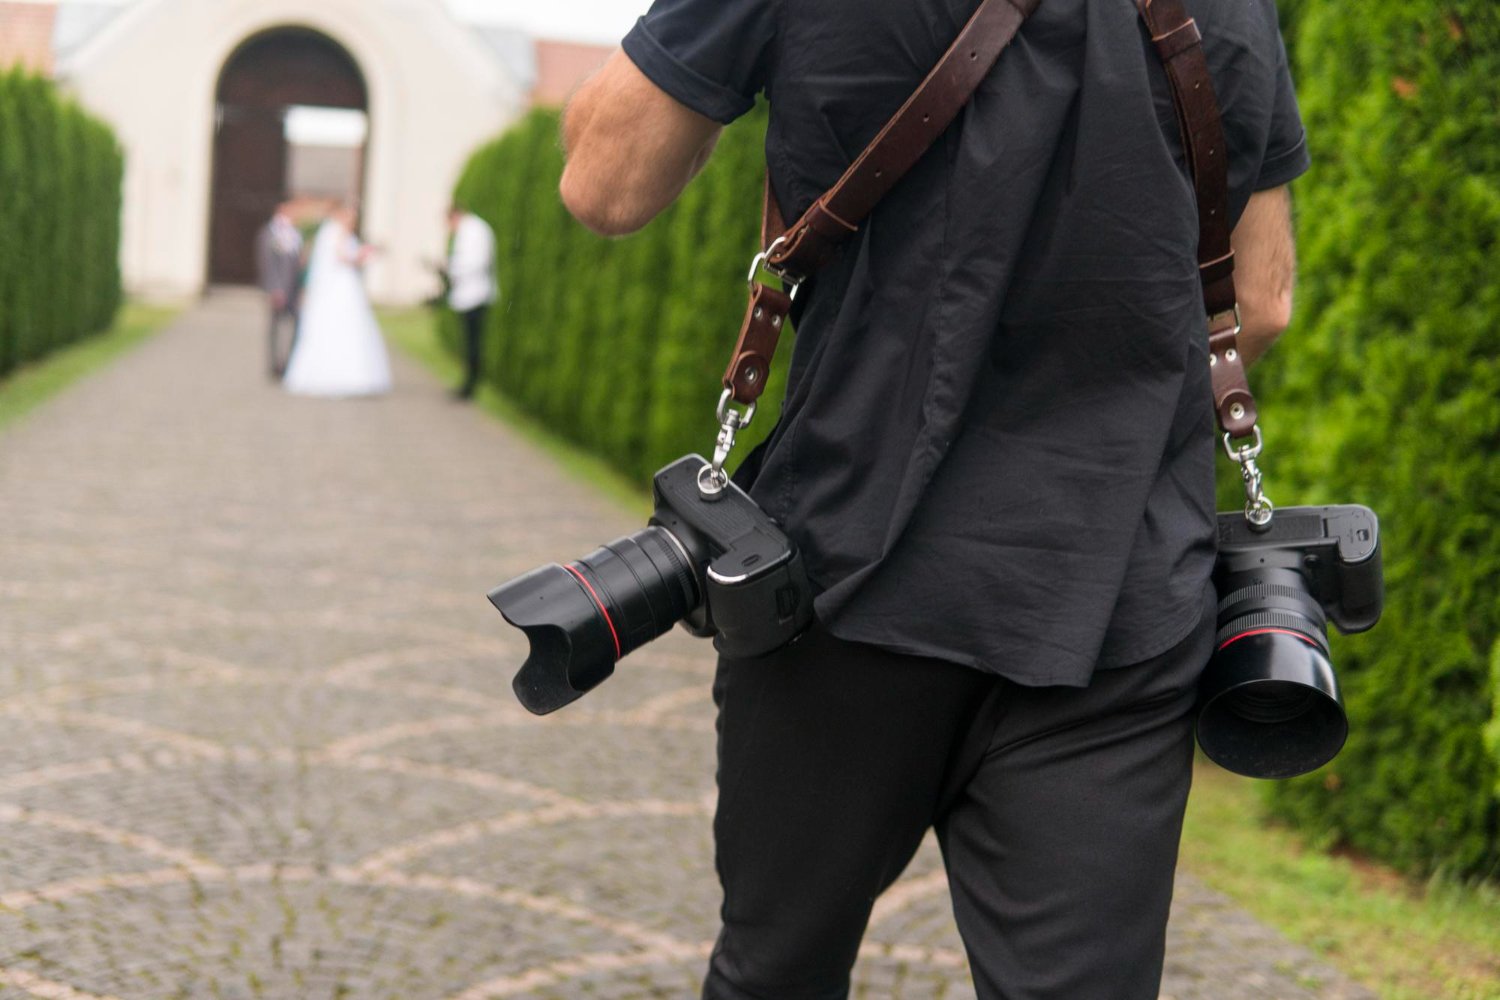 professional wedding photographer